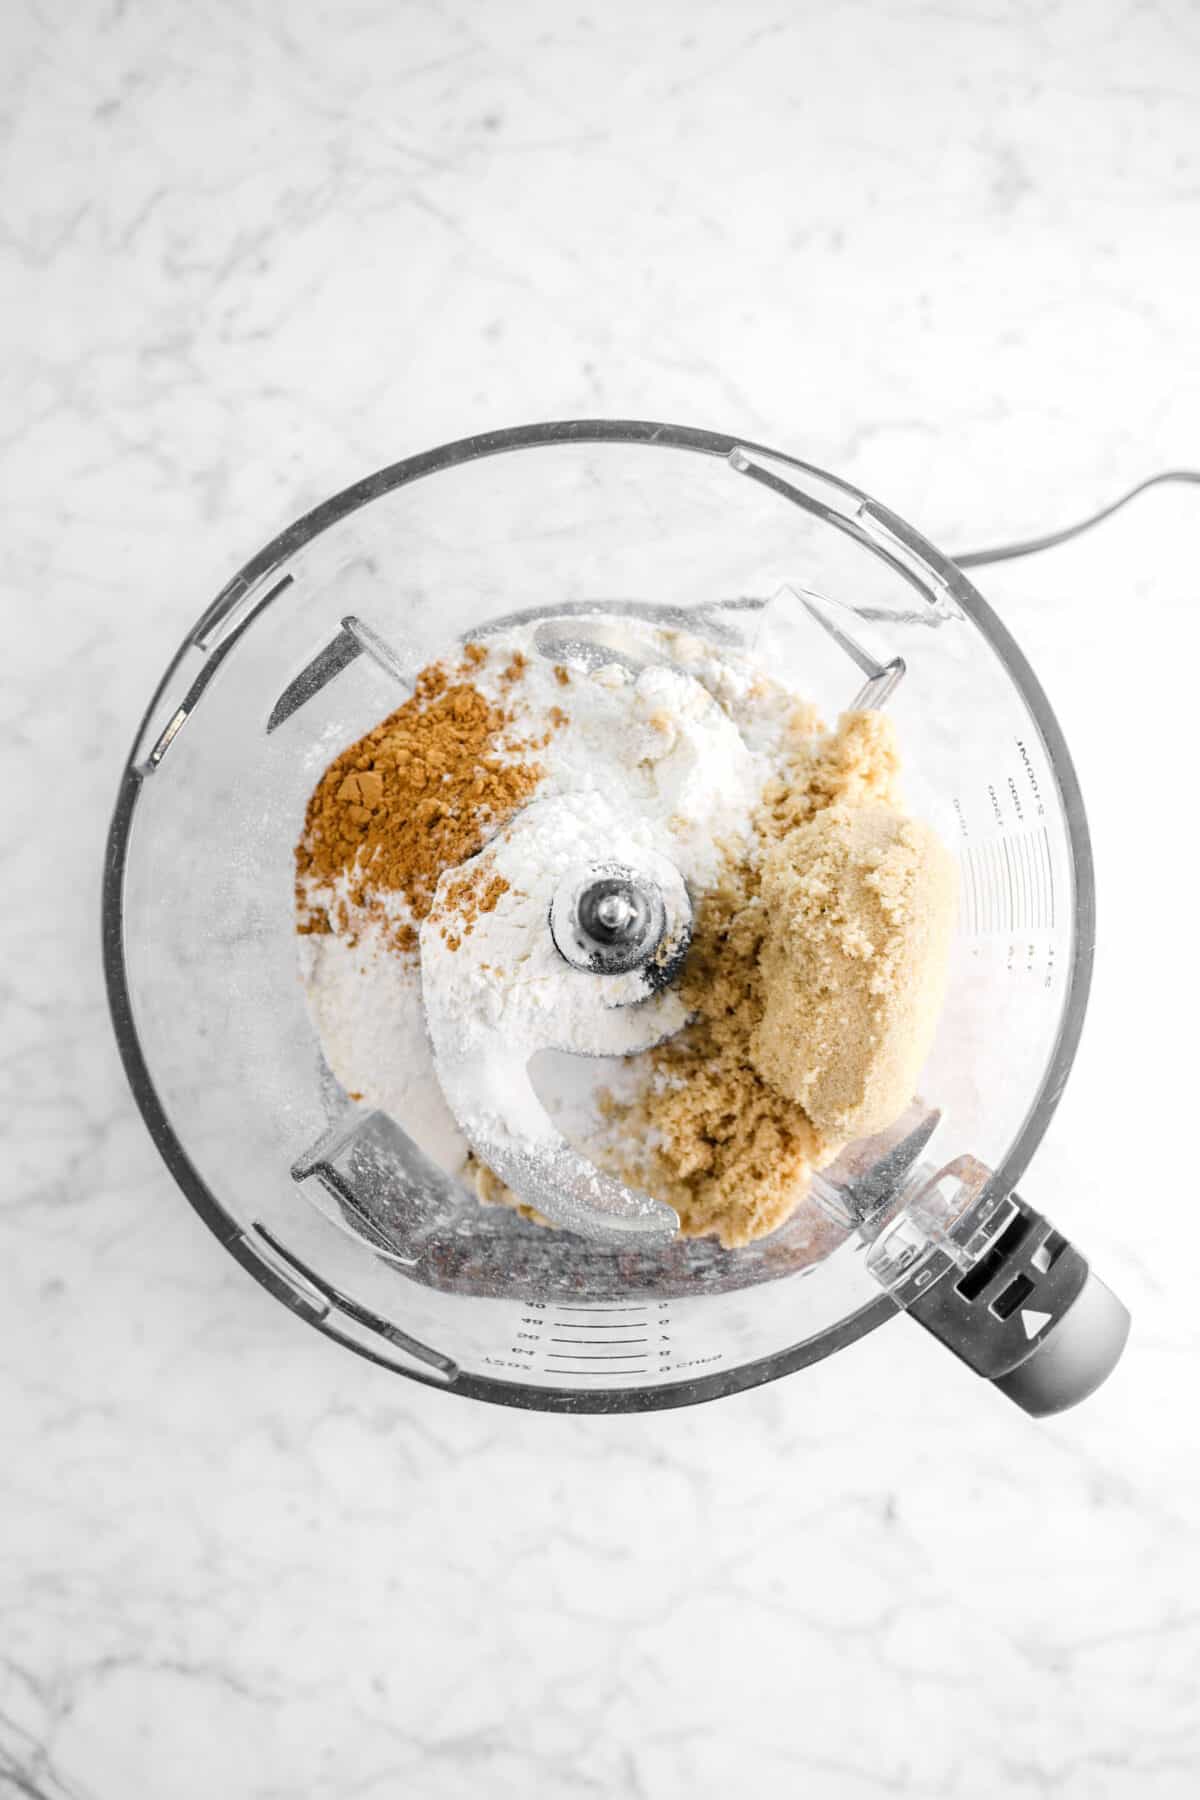 cinnamon, brown sugar, and flour in a food processor